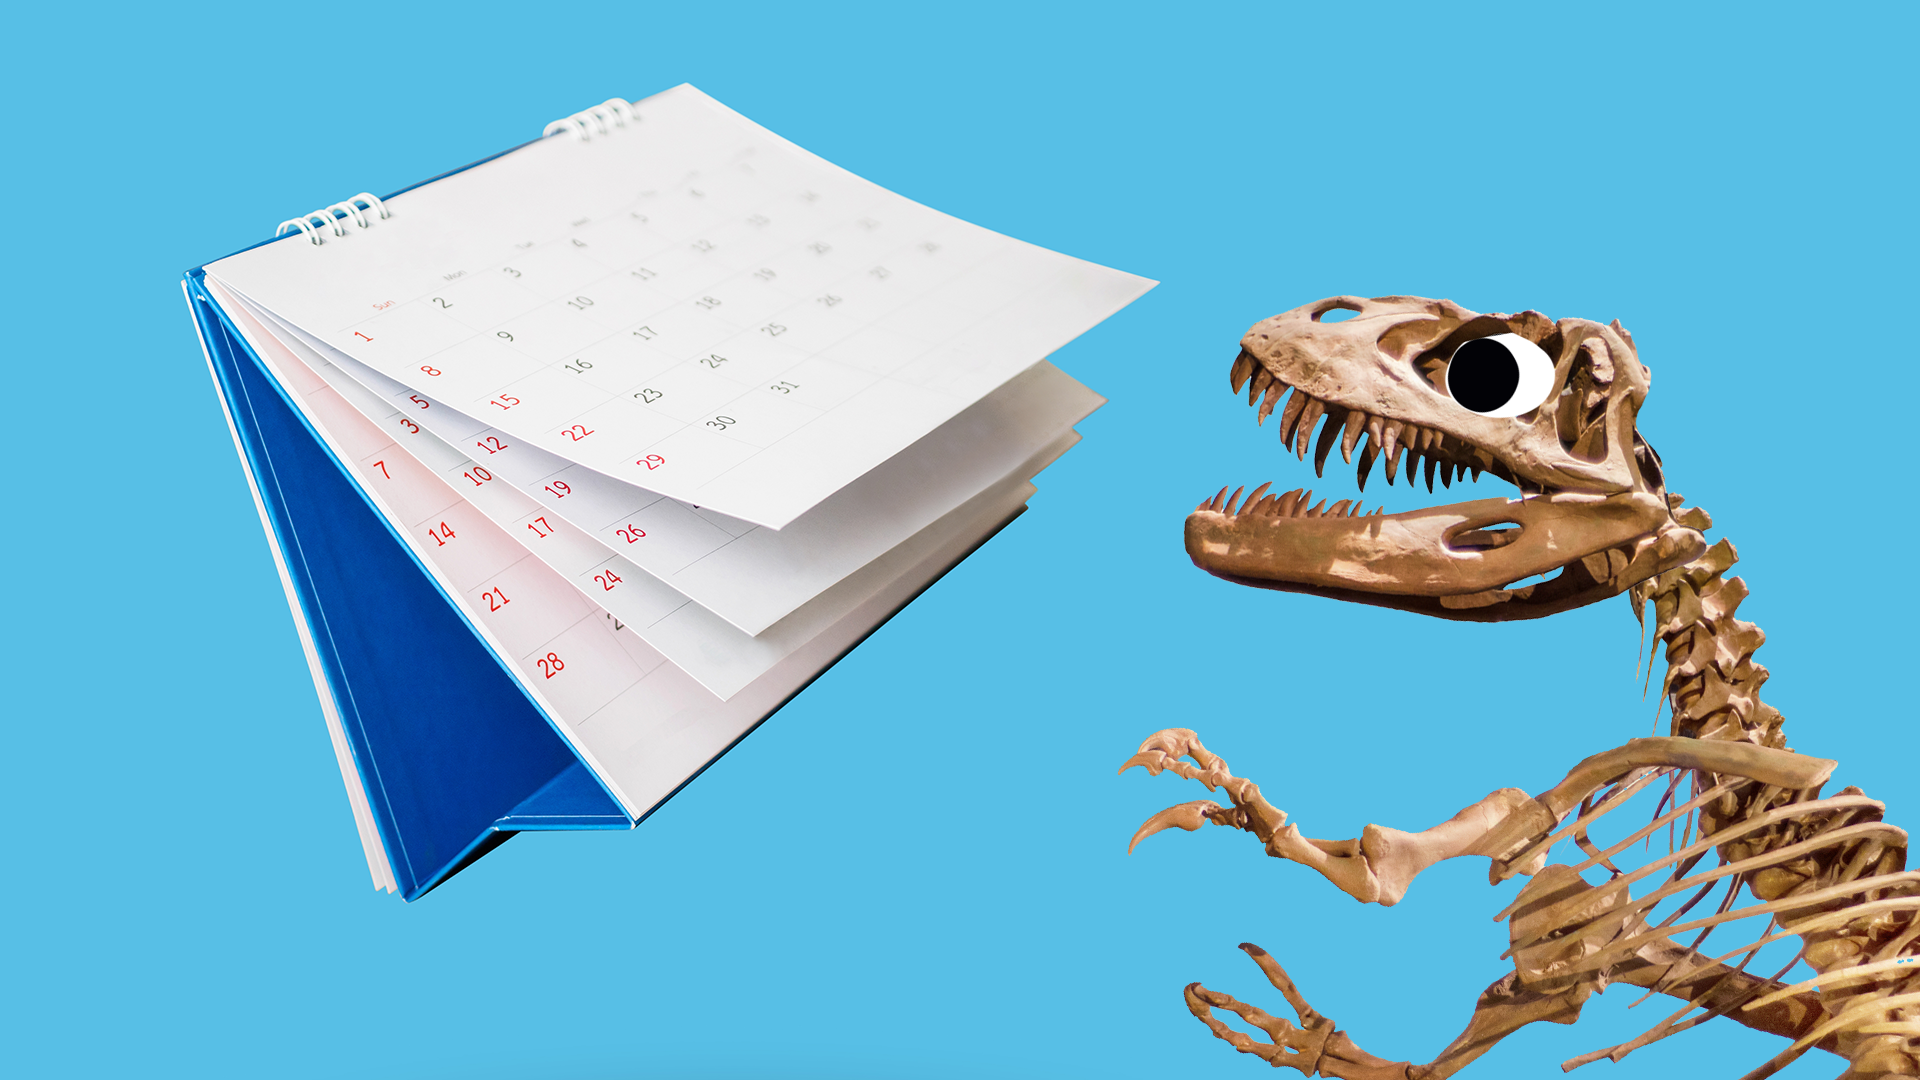 A dinosaur skeleton and a calendar 